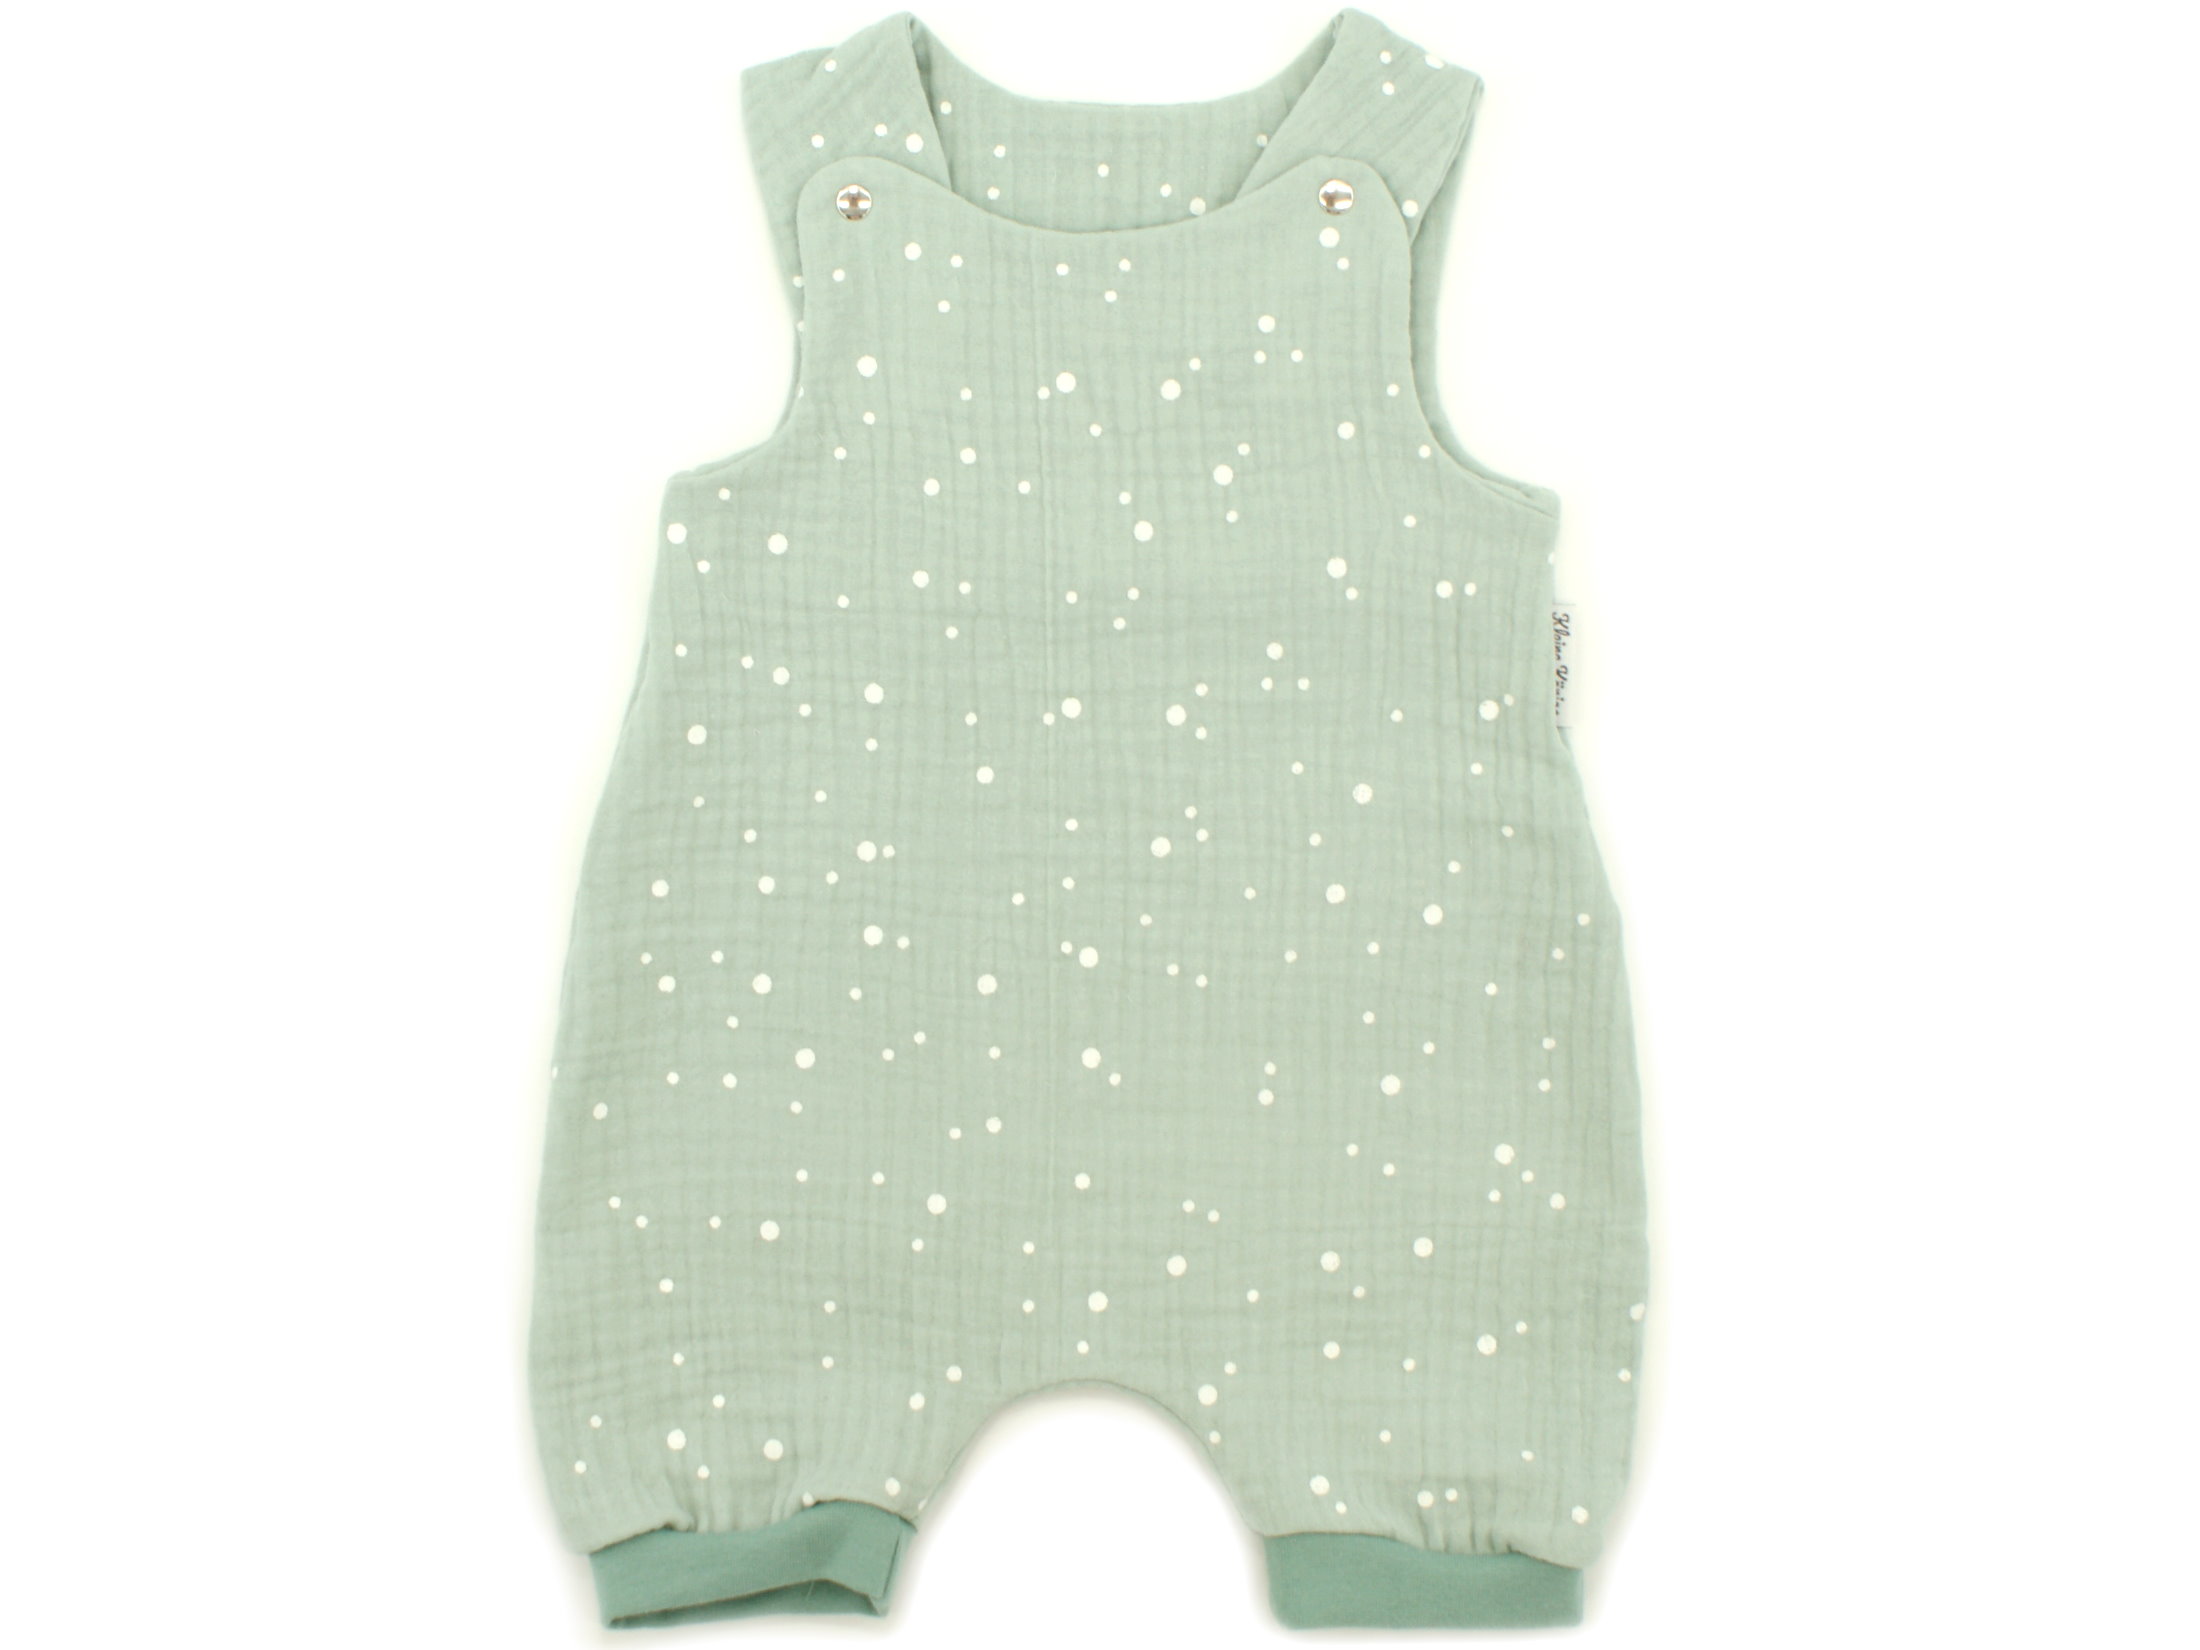 Musselin Baby Kurzstrampler "White Dots" mint